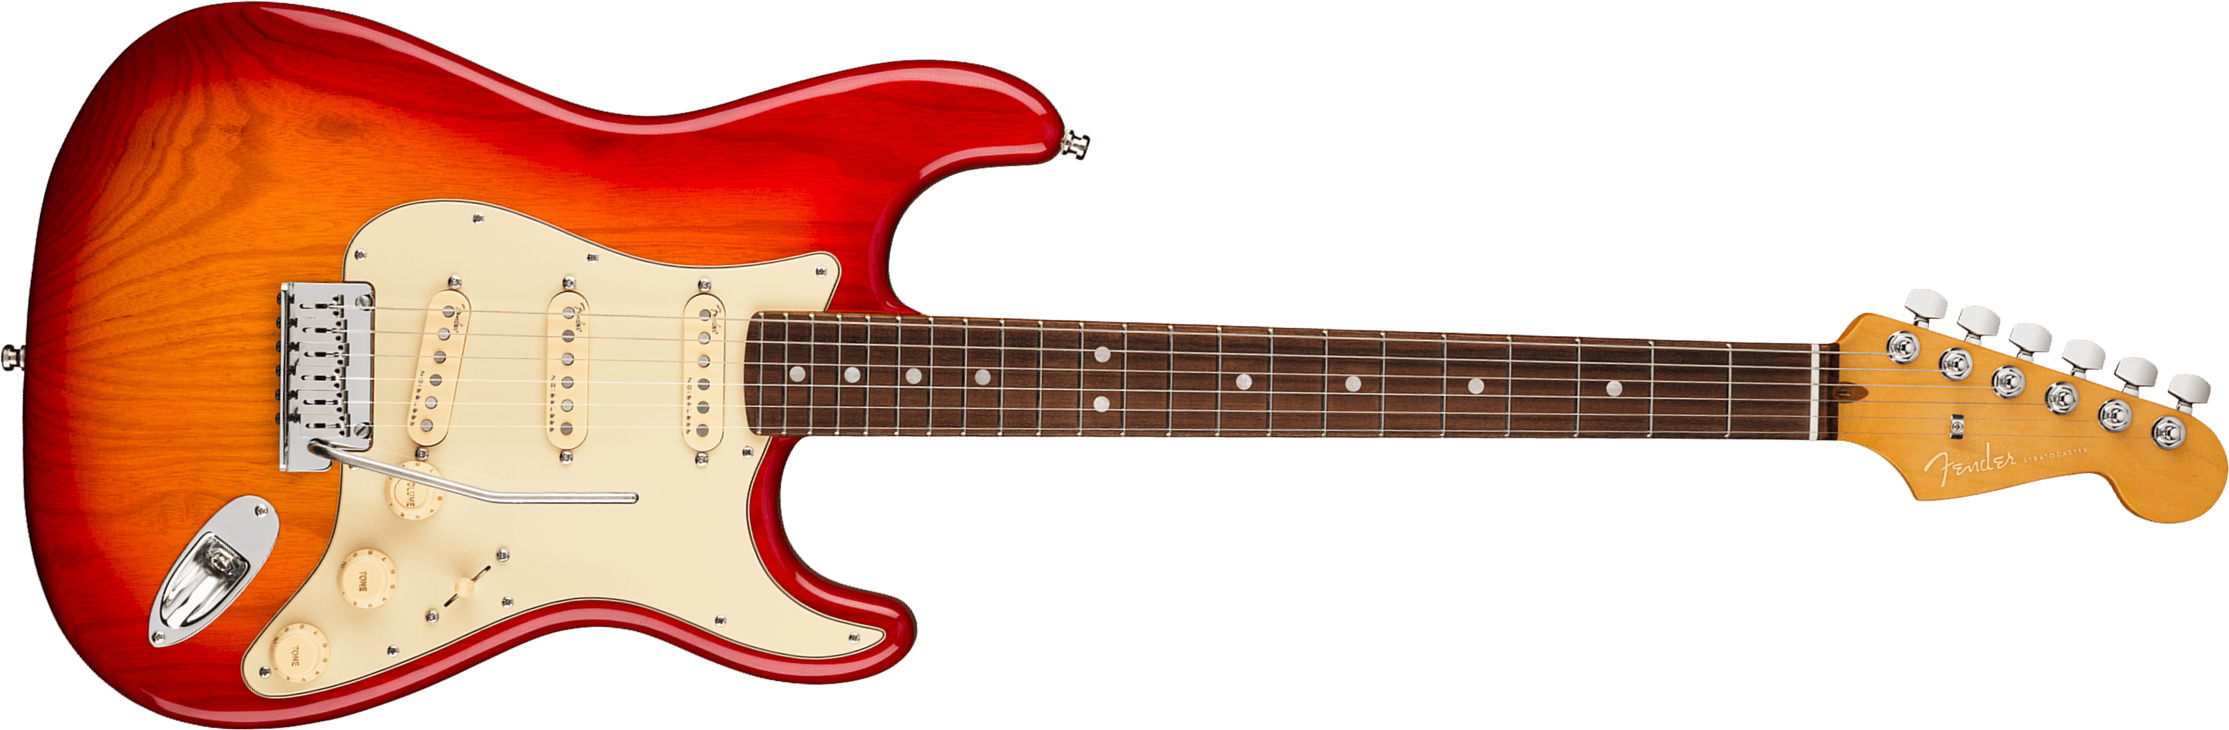 Fender Strat American Ultra Hss 2019 Usa Mn - Plasma Red Burst - E-Gitarre in Str-Form - Main picture